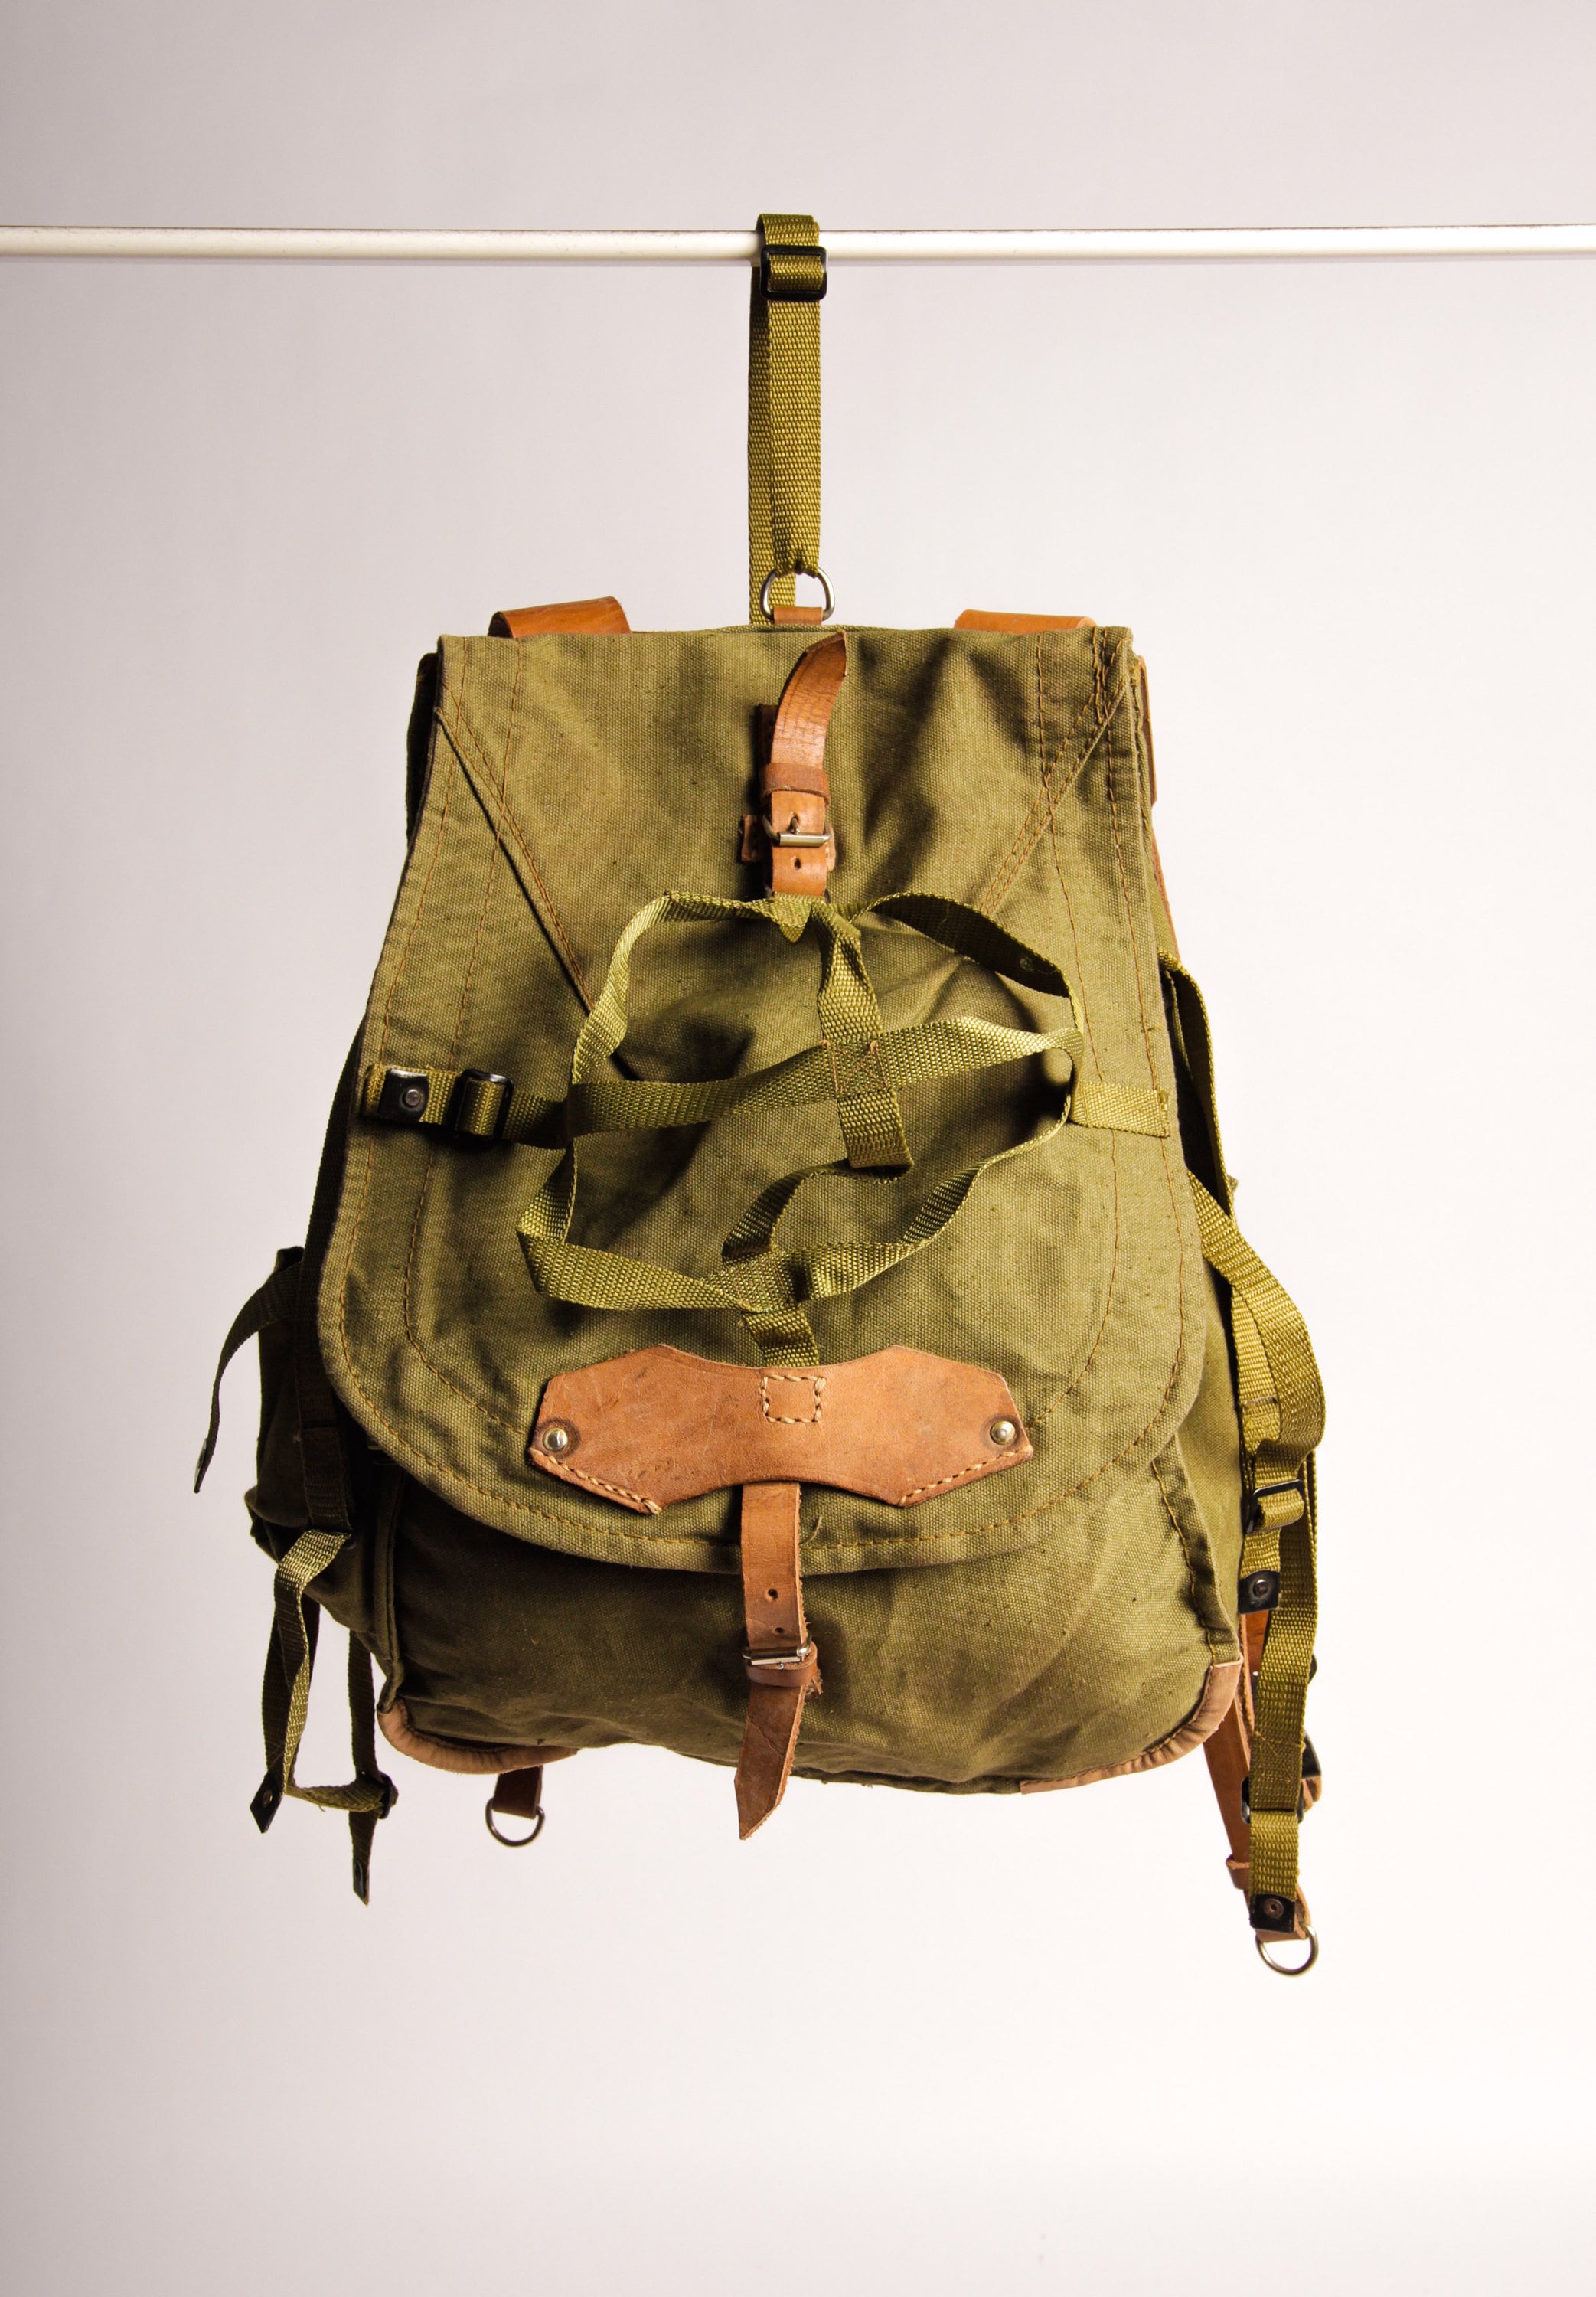 Romanian Military Backpack vintage 70's military knapsack - Etsy 日本